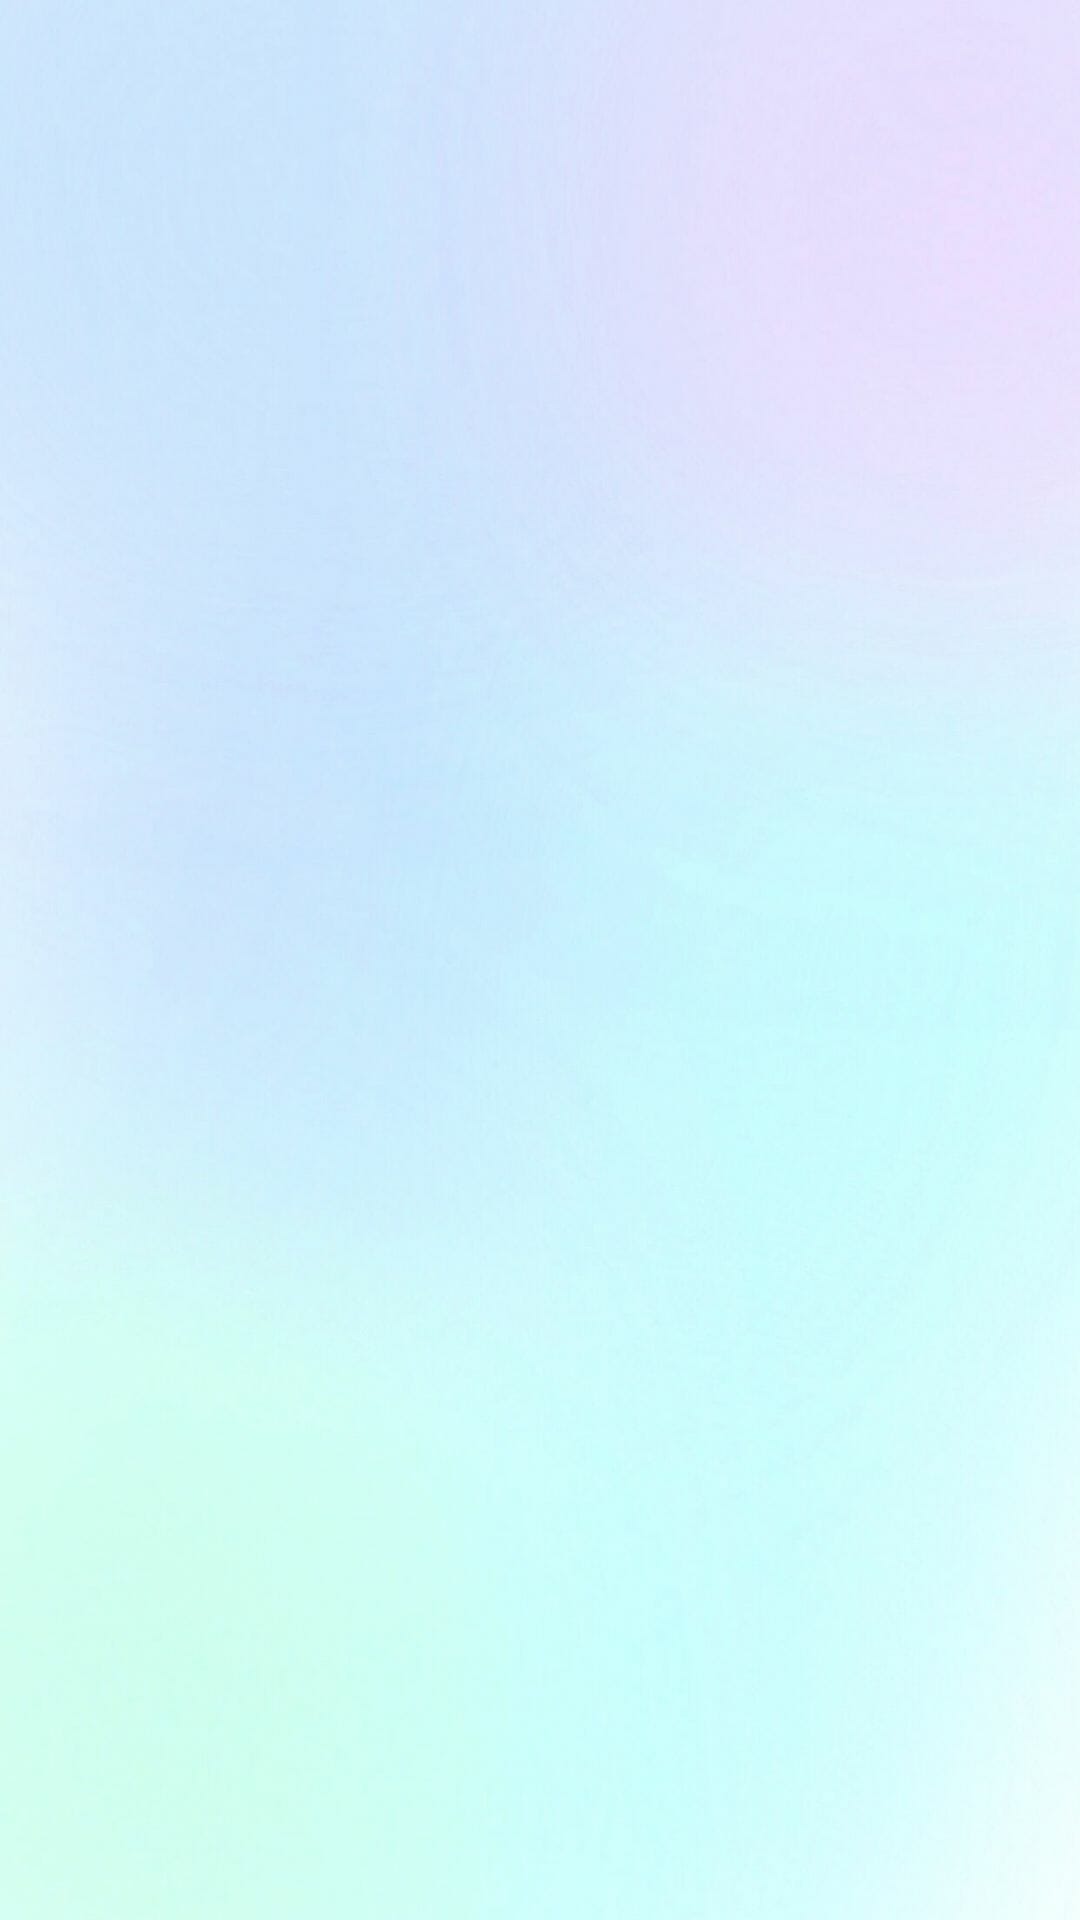 Pastel blue purple mint ombre (gradient) phone wallpaper. Phone / iPhone HD Wallpaper Background Download HD Wallpaper (Desktop Background / Android / iPhone) (1080p, 4k) (1080x1920) (2022)